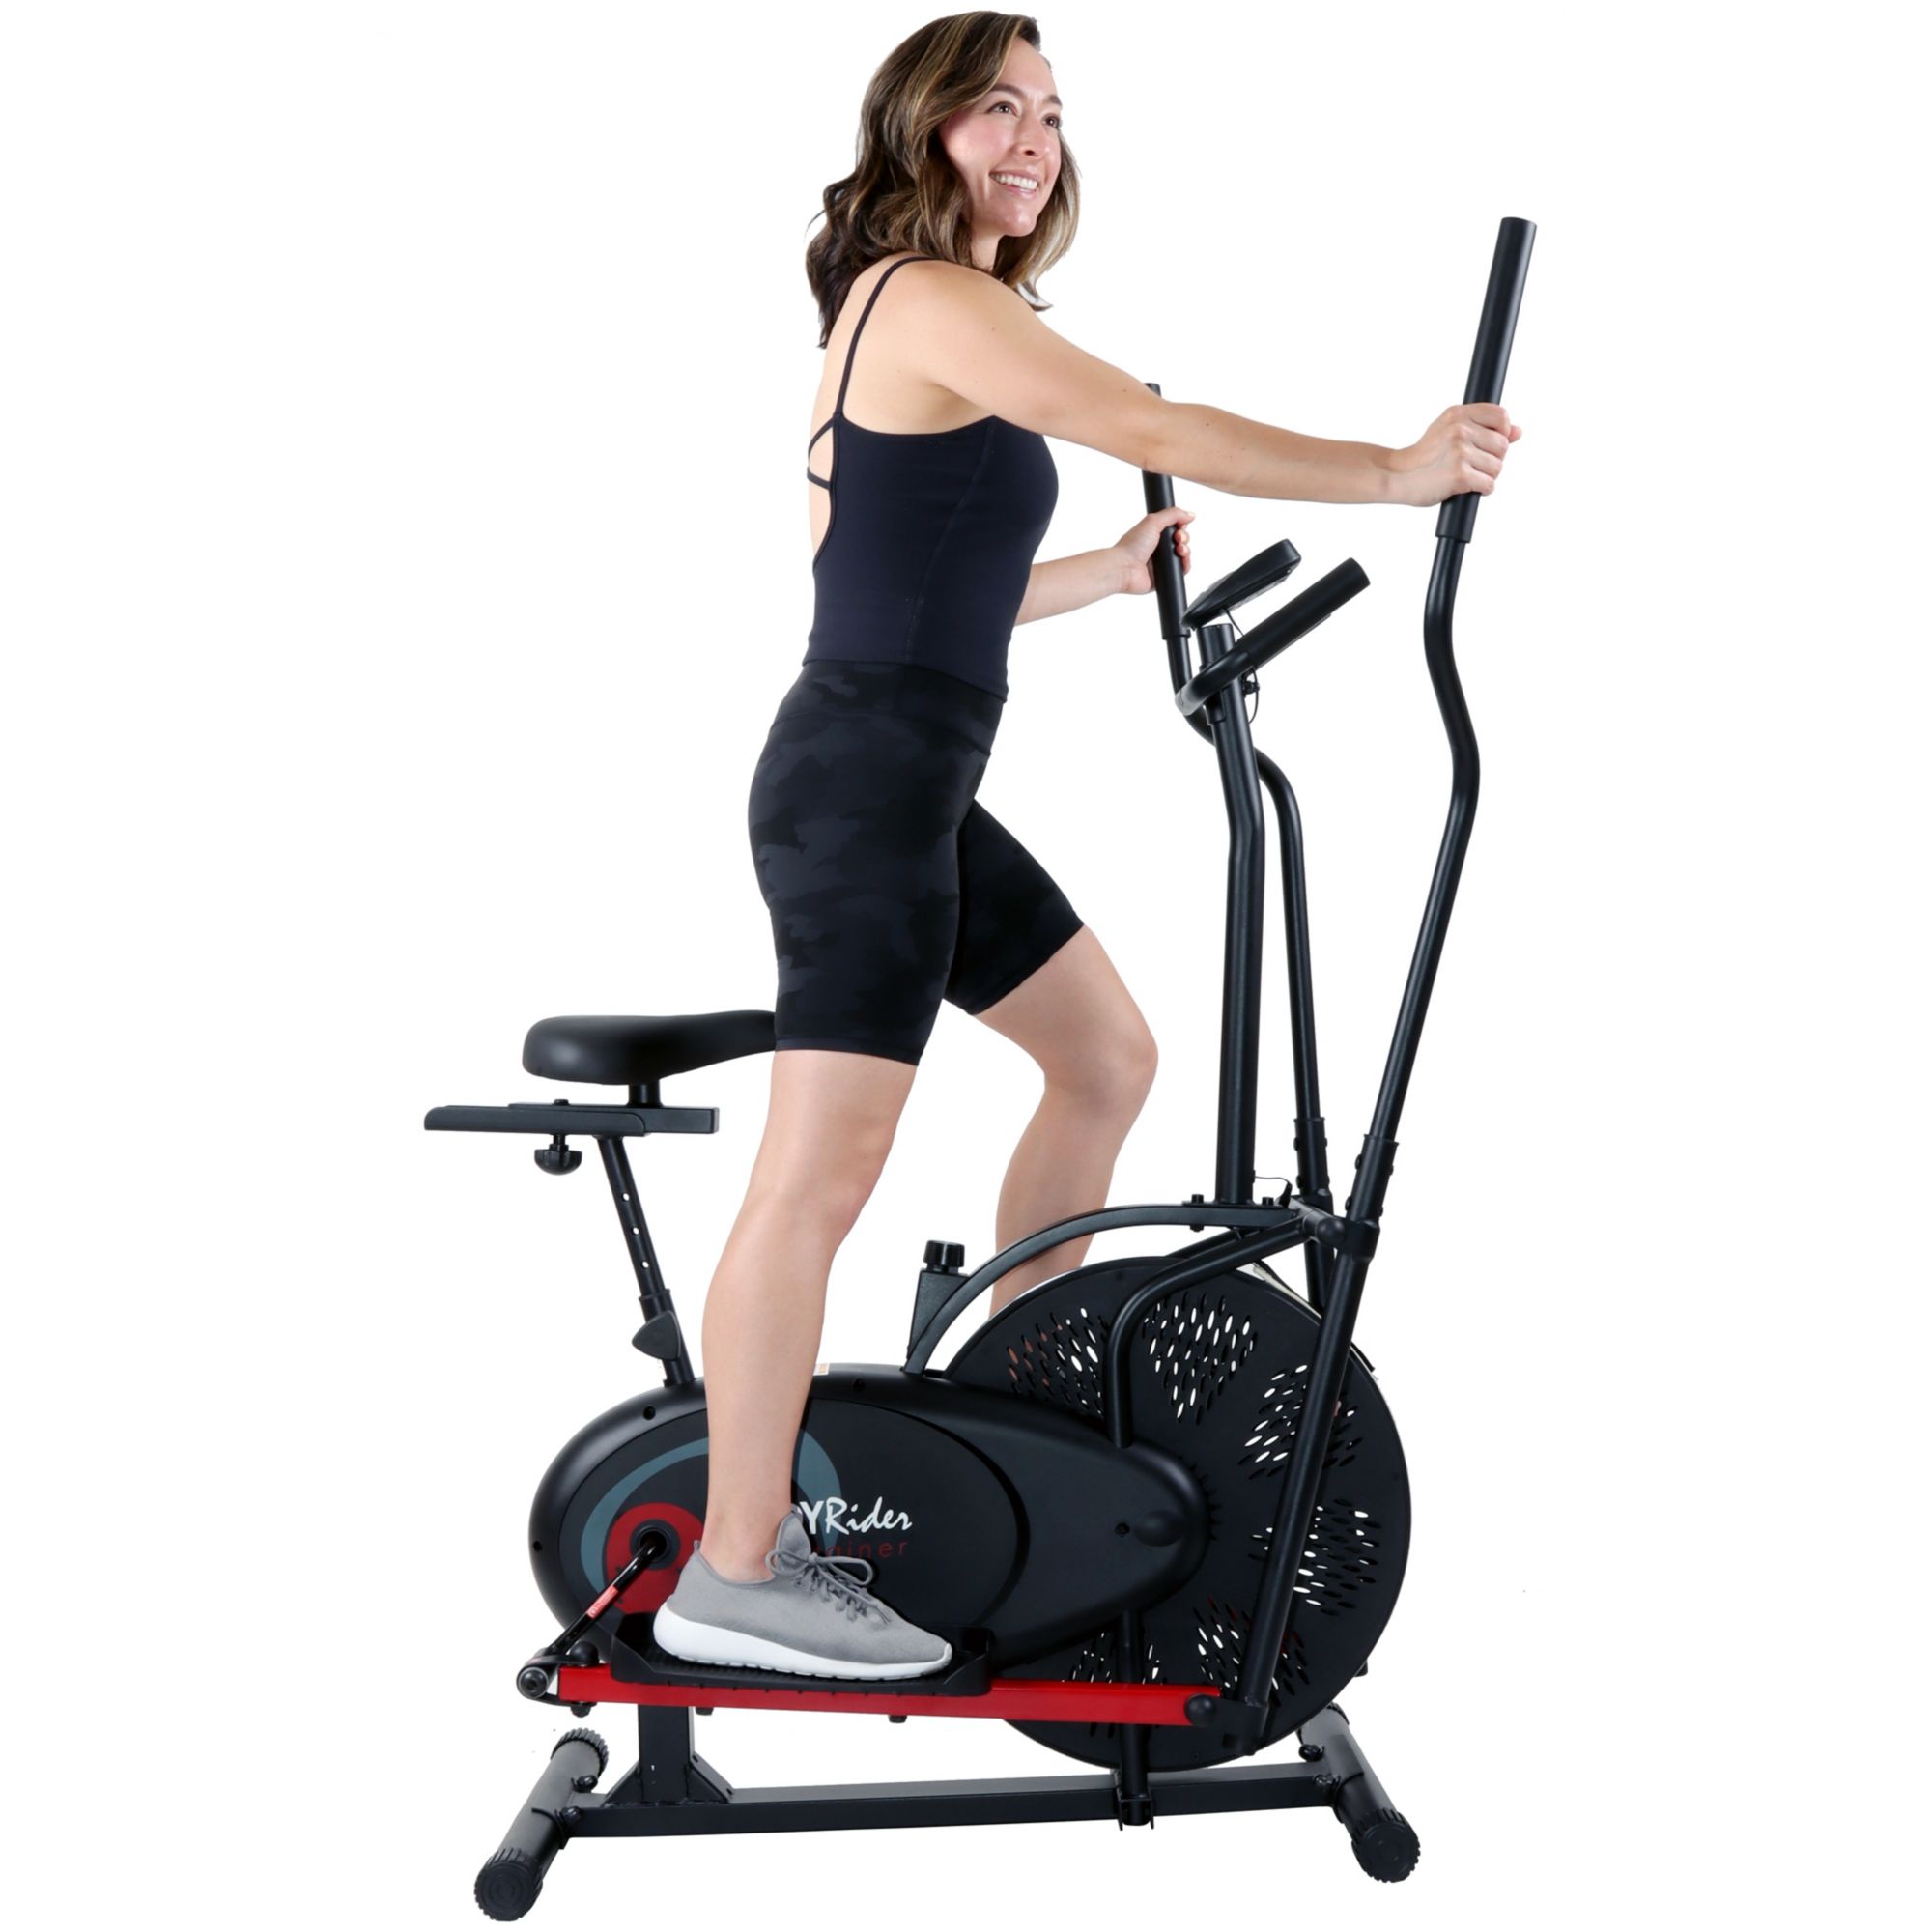 body rider dual trainer exercise bike